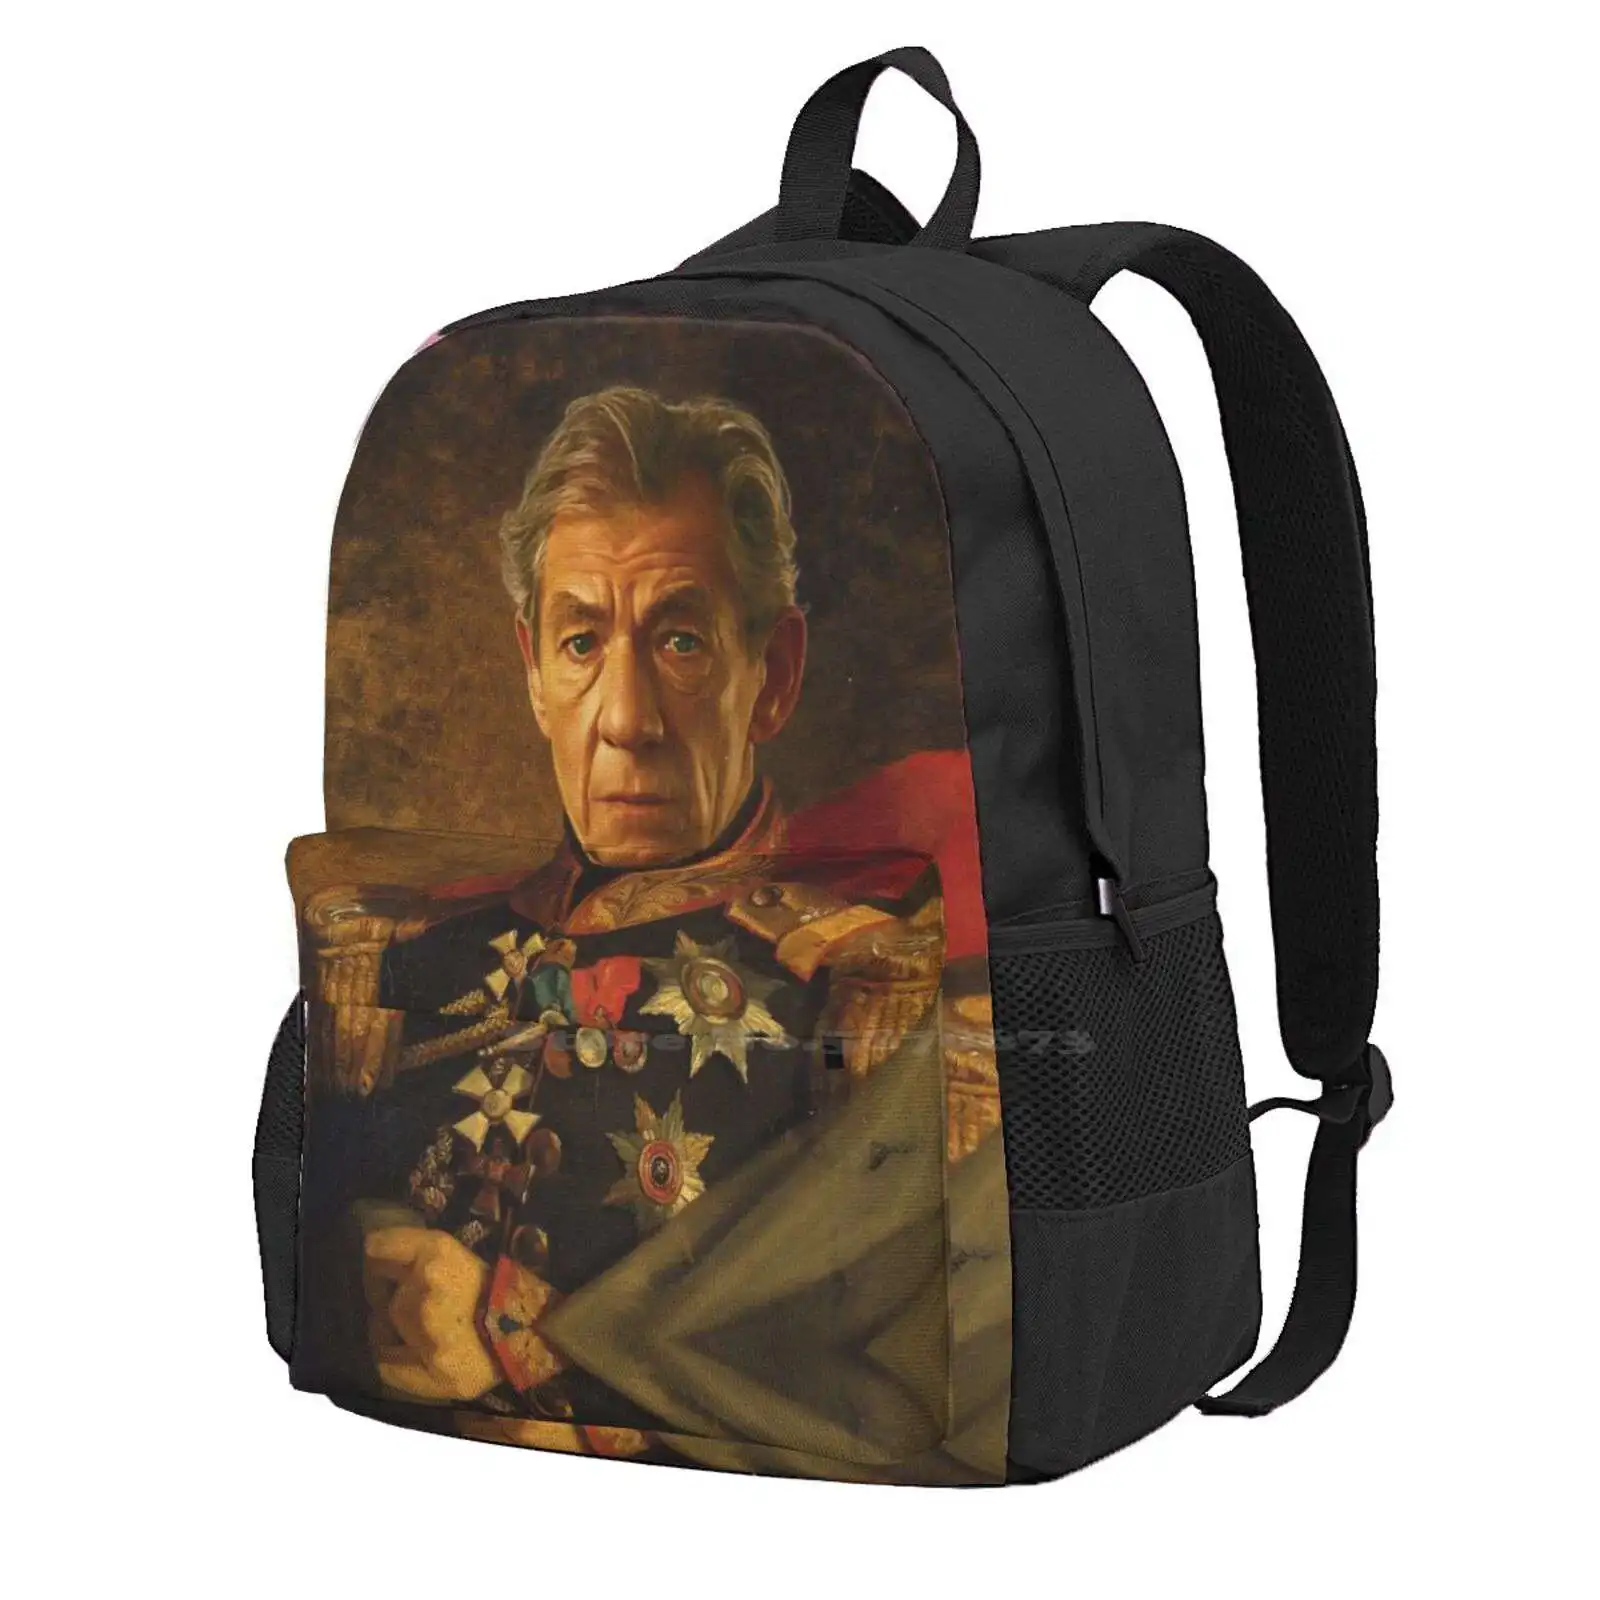 

Sir Ian Mckellen-Replaceface Hot Sale Backpack Fashion Bags Sir Ian Mckellen Portrait Photoshop George Dawe Replaceface Celebs